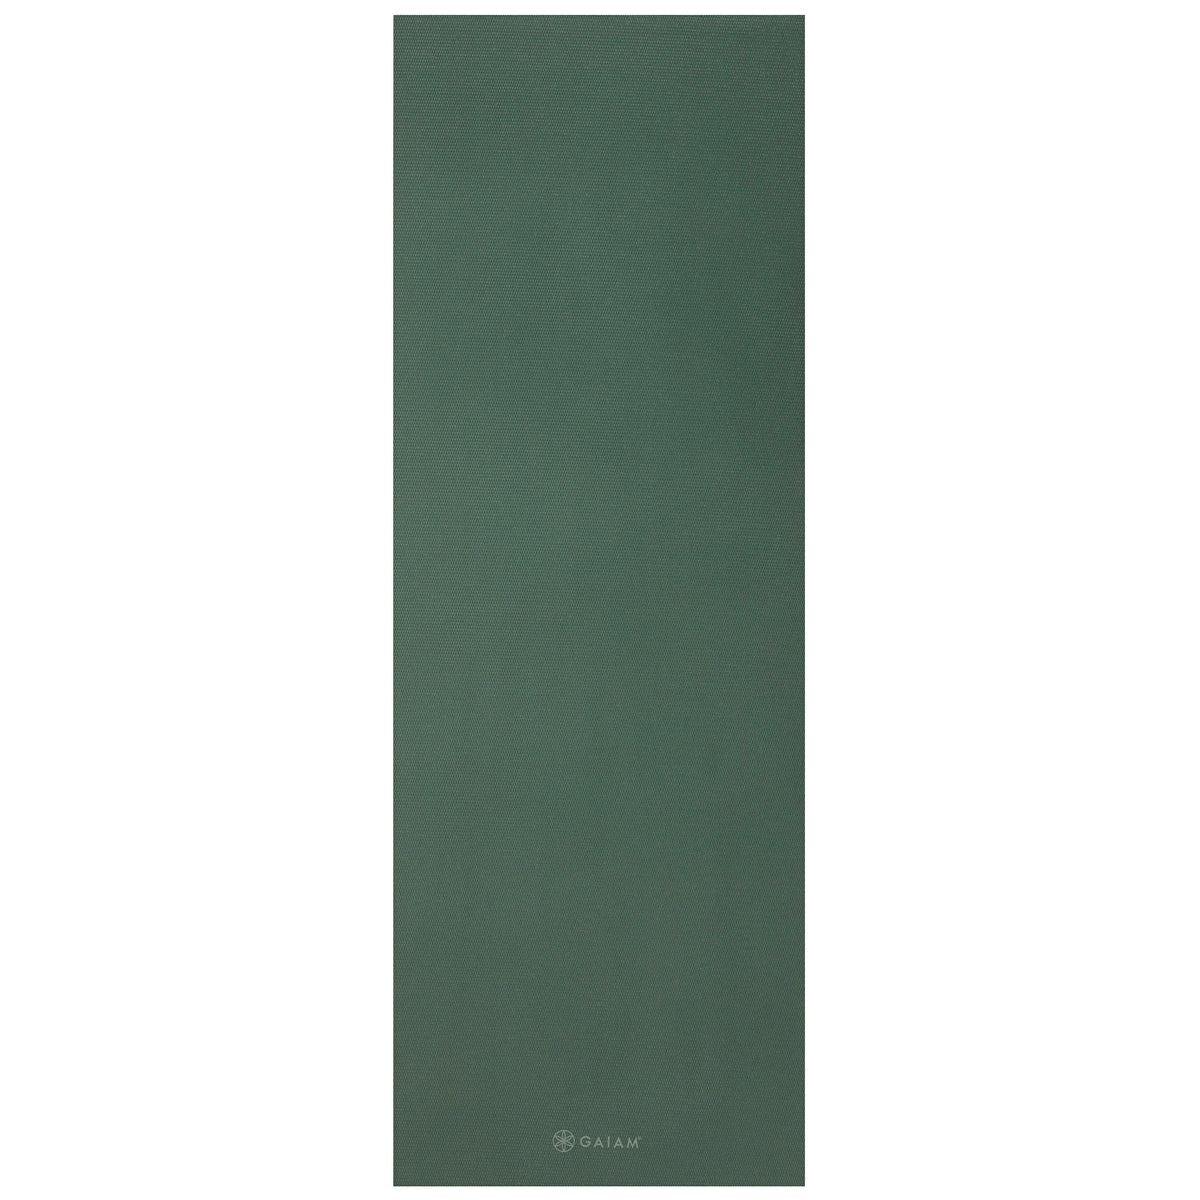 Gaiam Gaiam Celestial Green Yoga Mat 5mm Classic Printed - Sports Equipment